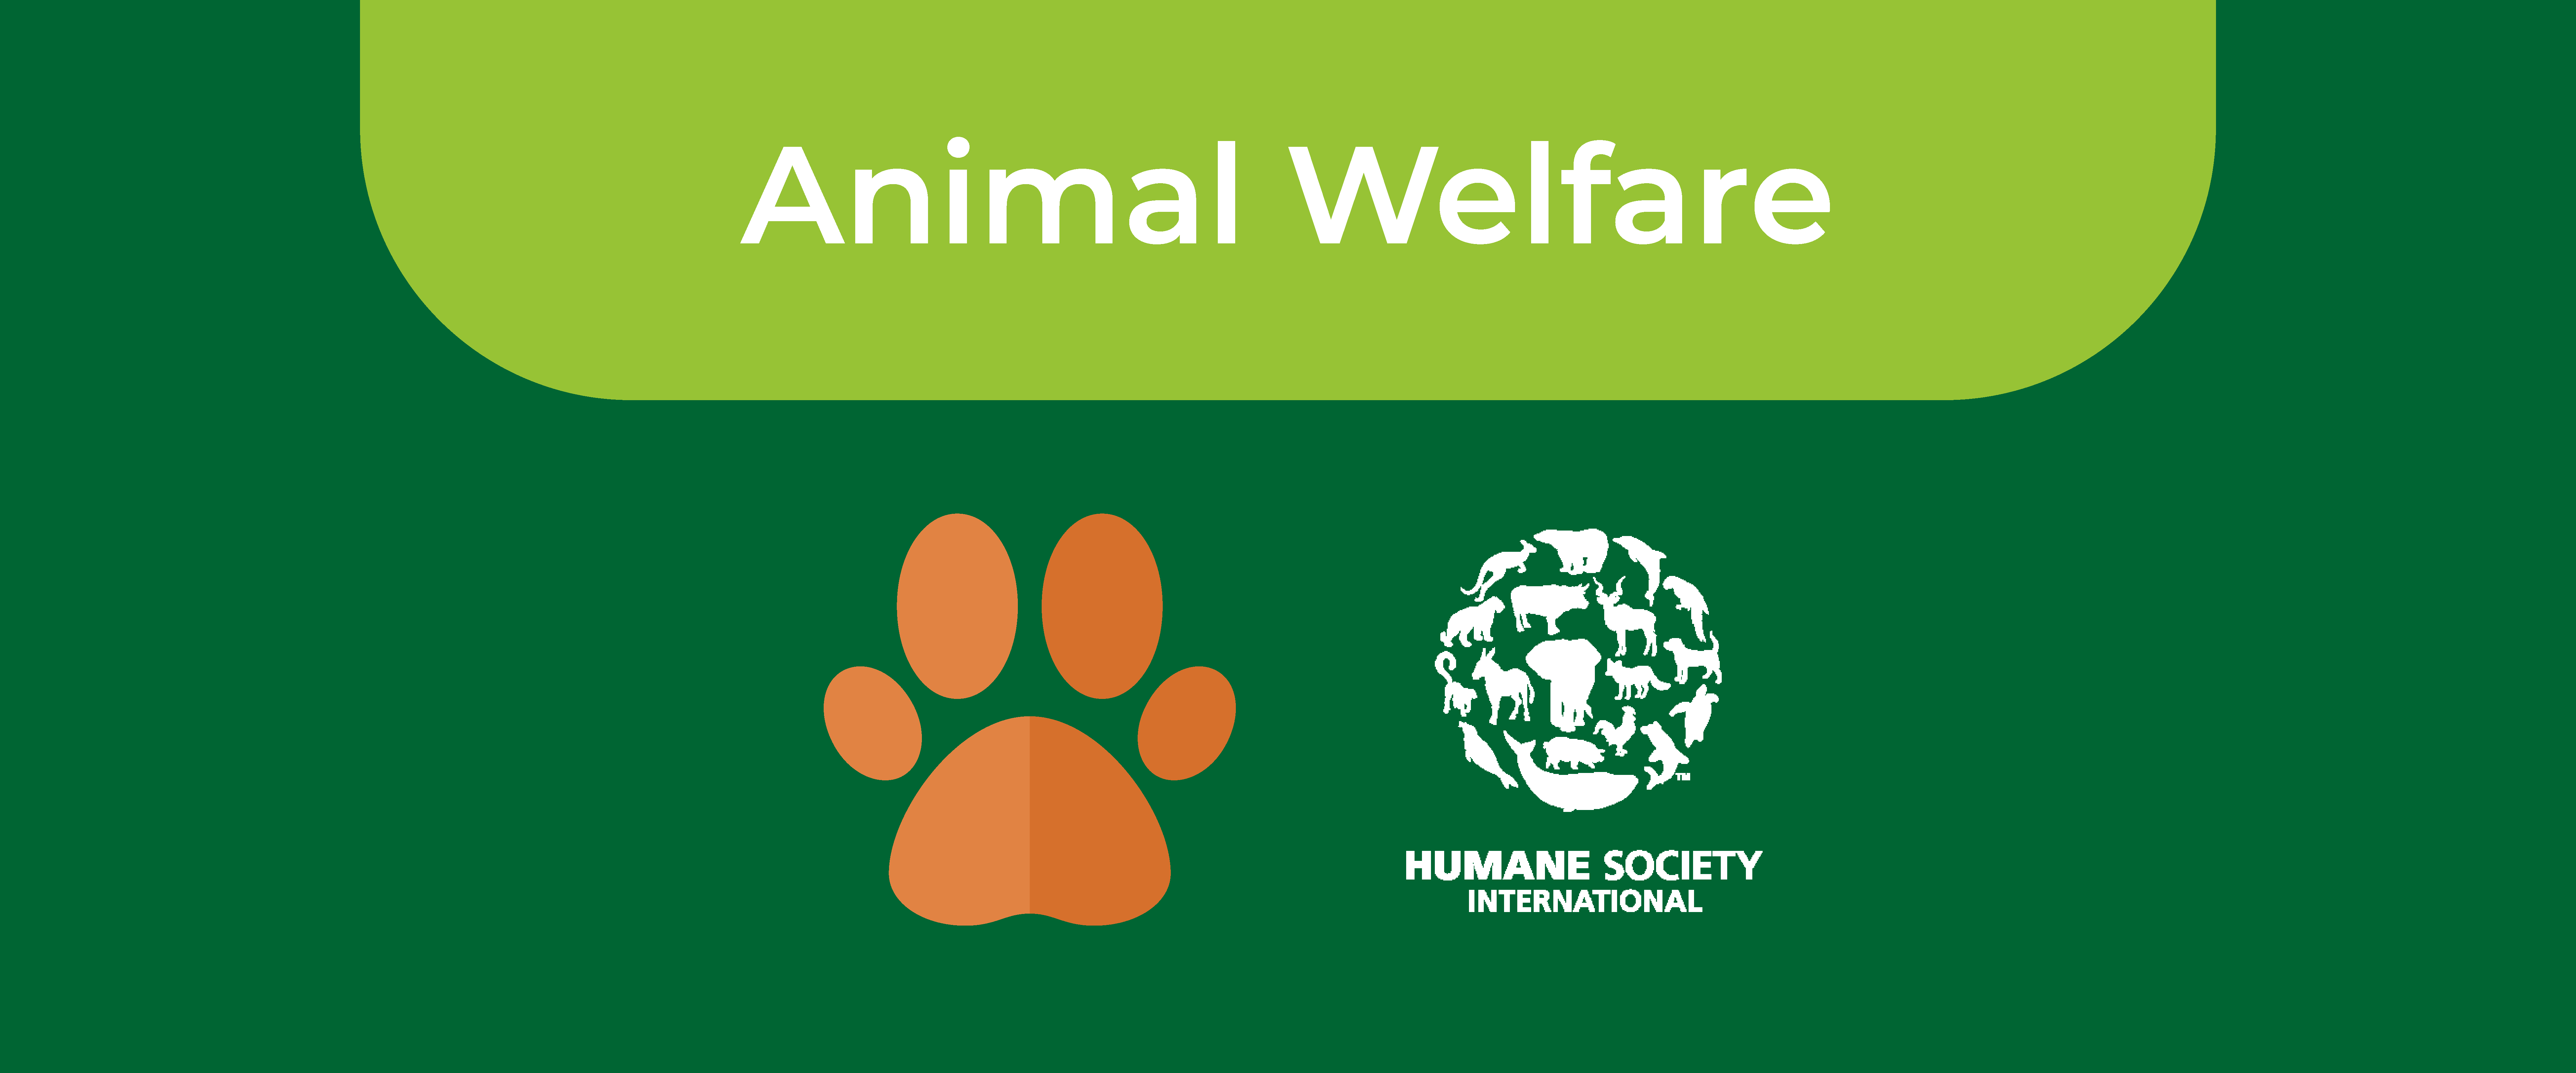 Project Longhurst - Animal welfare